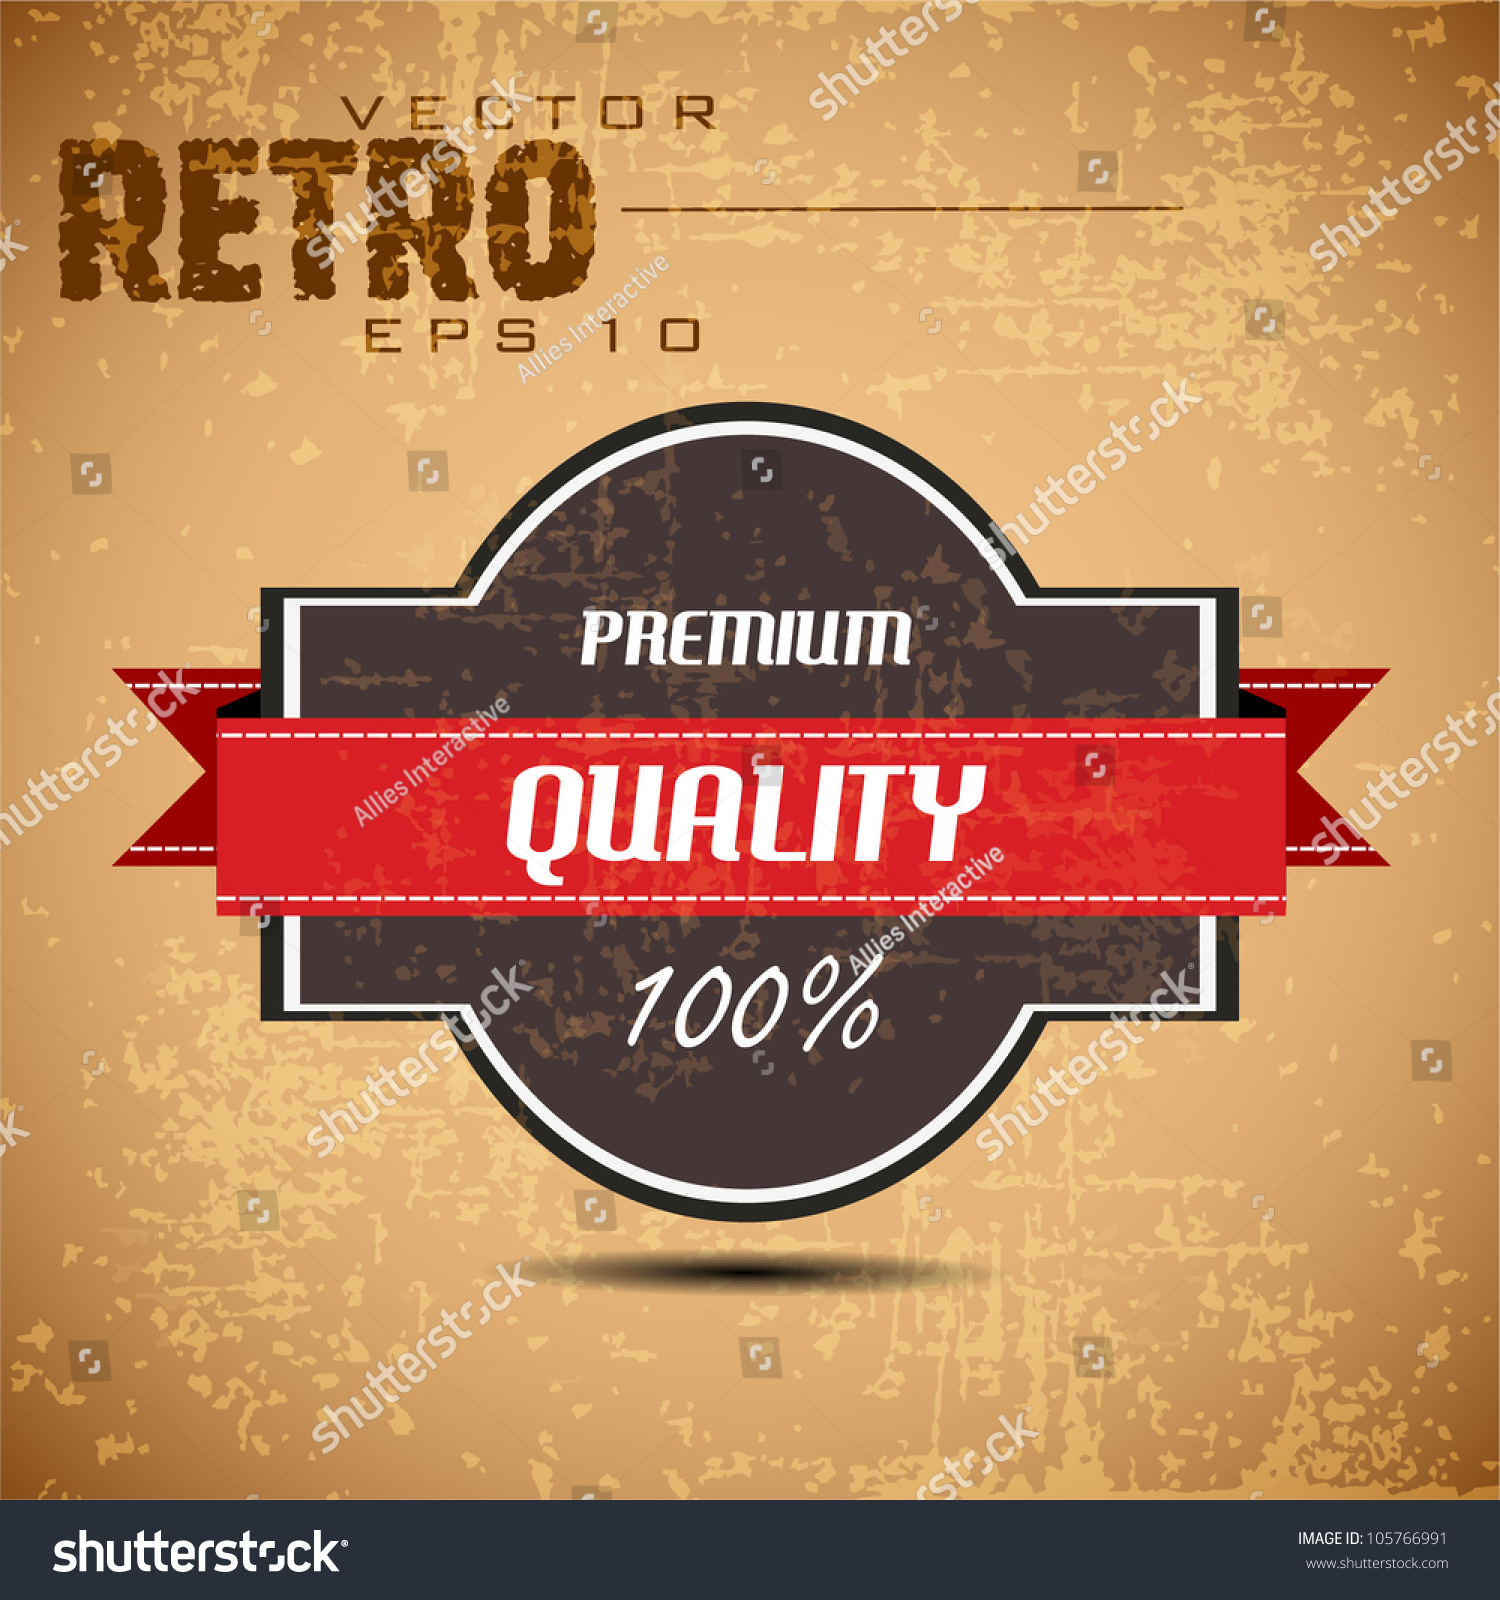 Old Brown Color Retro Vintage Grunge Stock Vector HD (Royalty Free ...